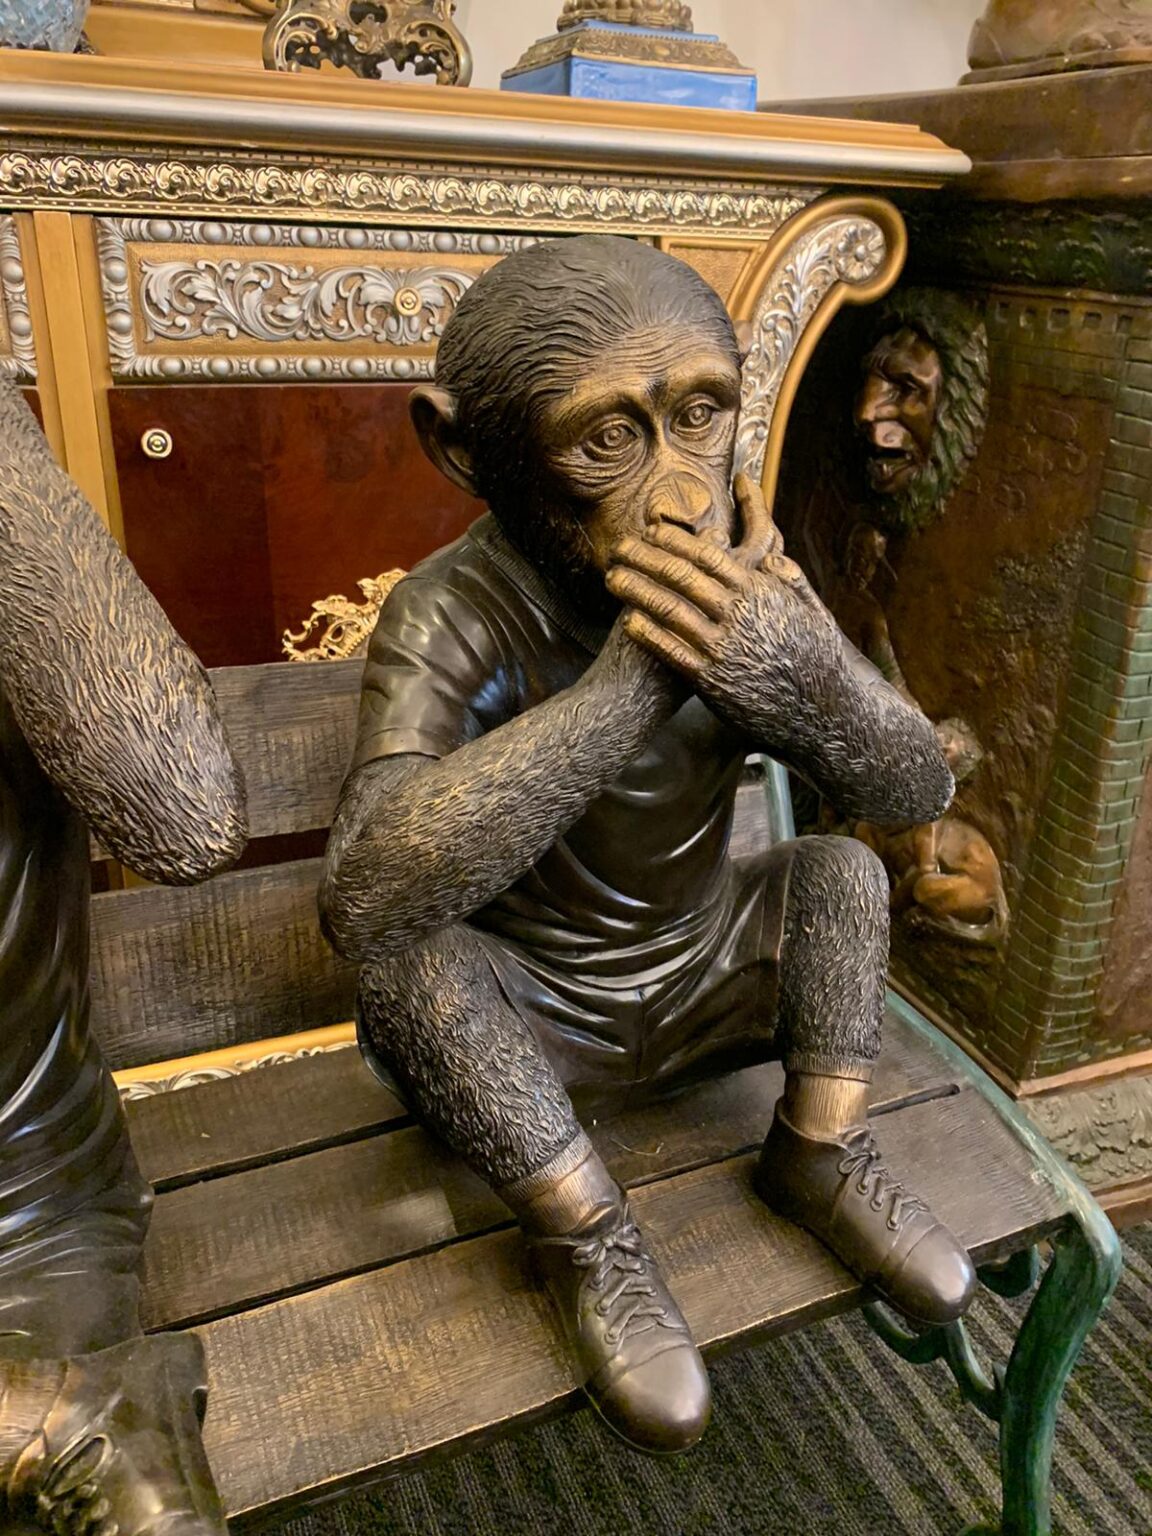 Three Wise Monkeys On Bench Large Bronze Statue Bronze Size X